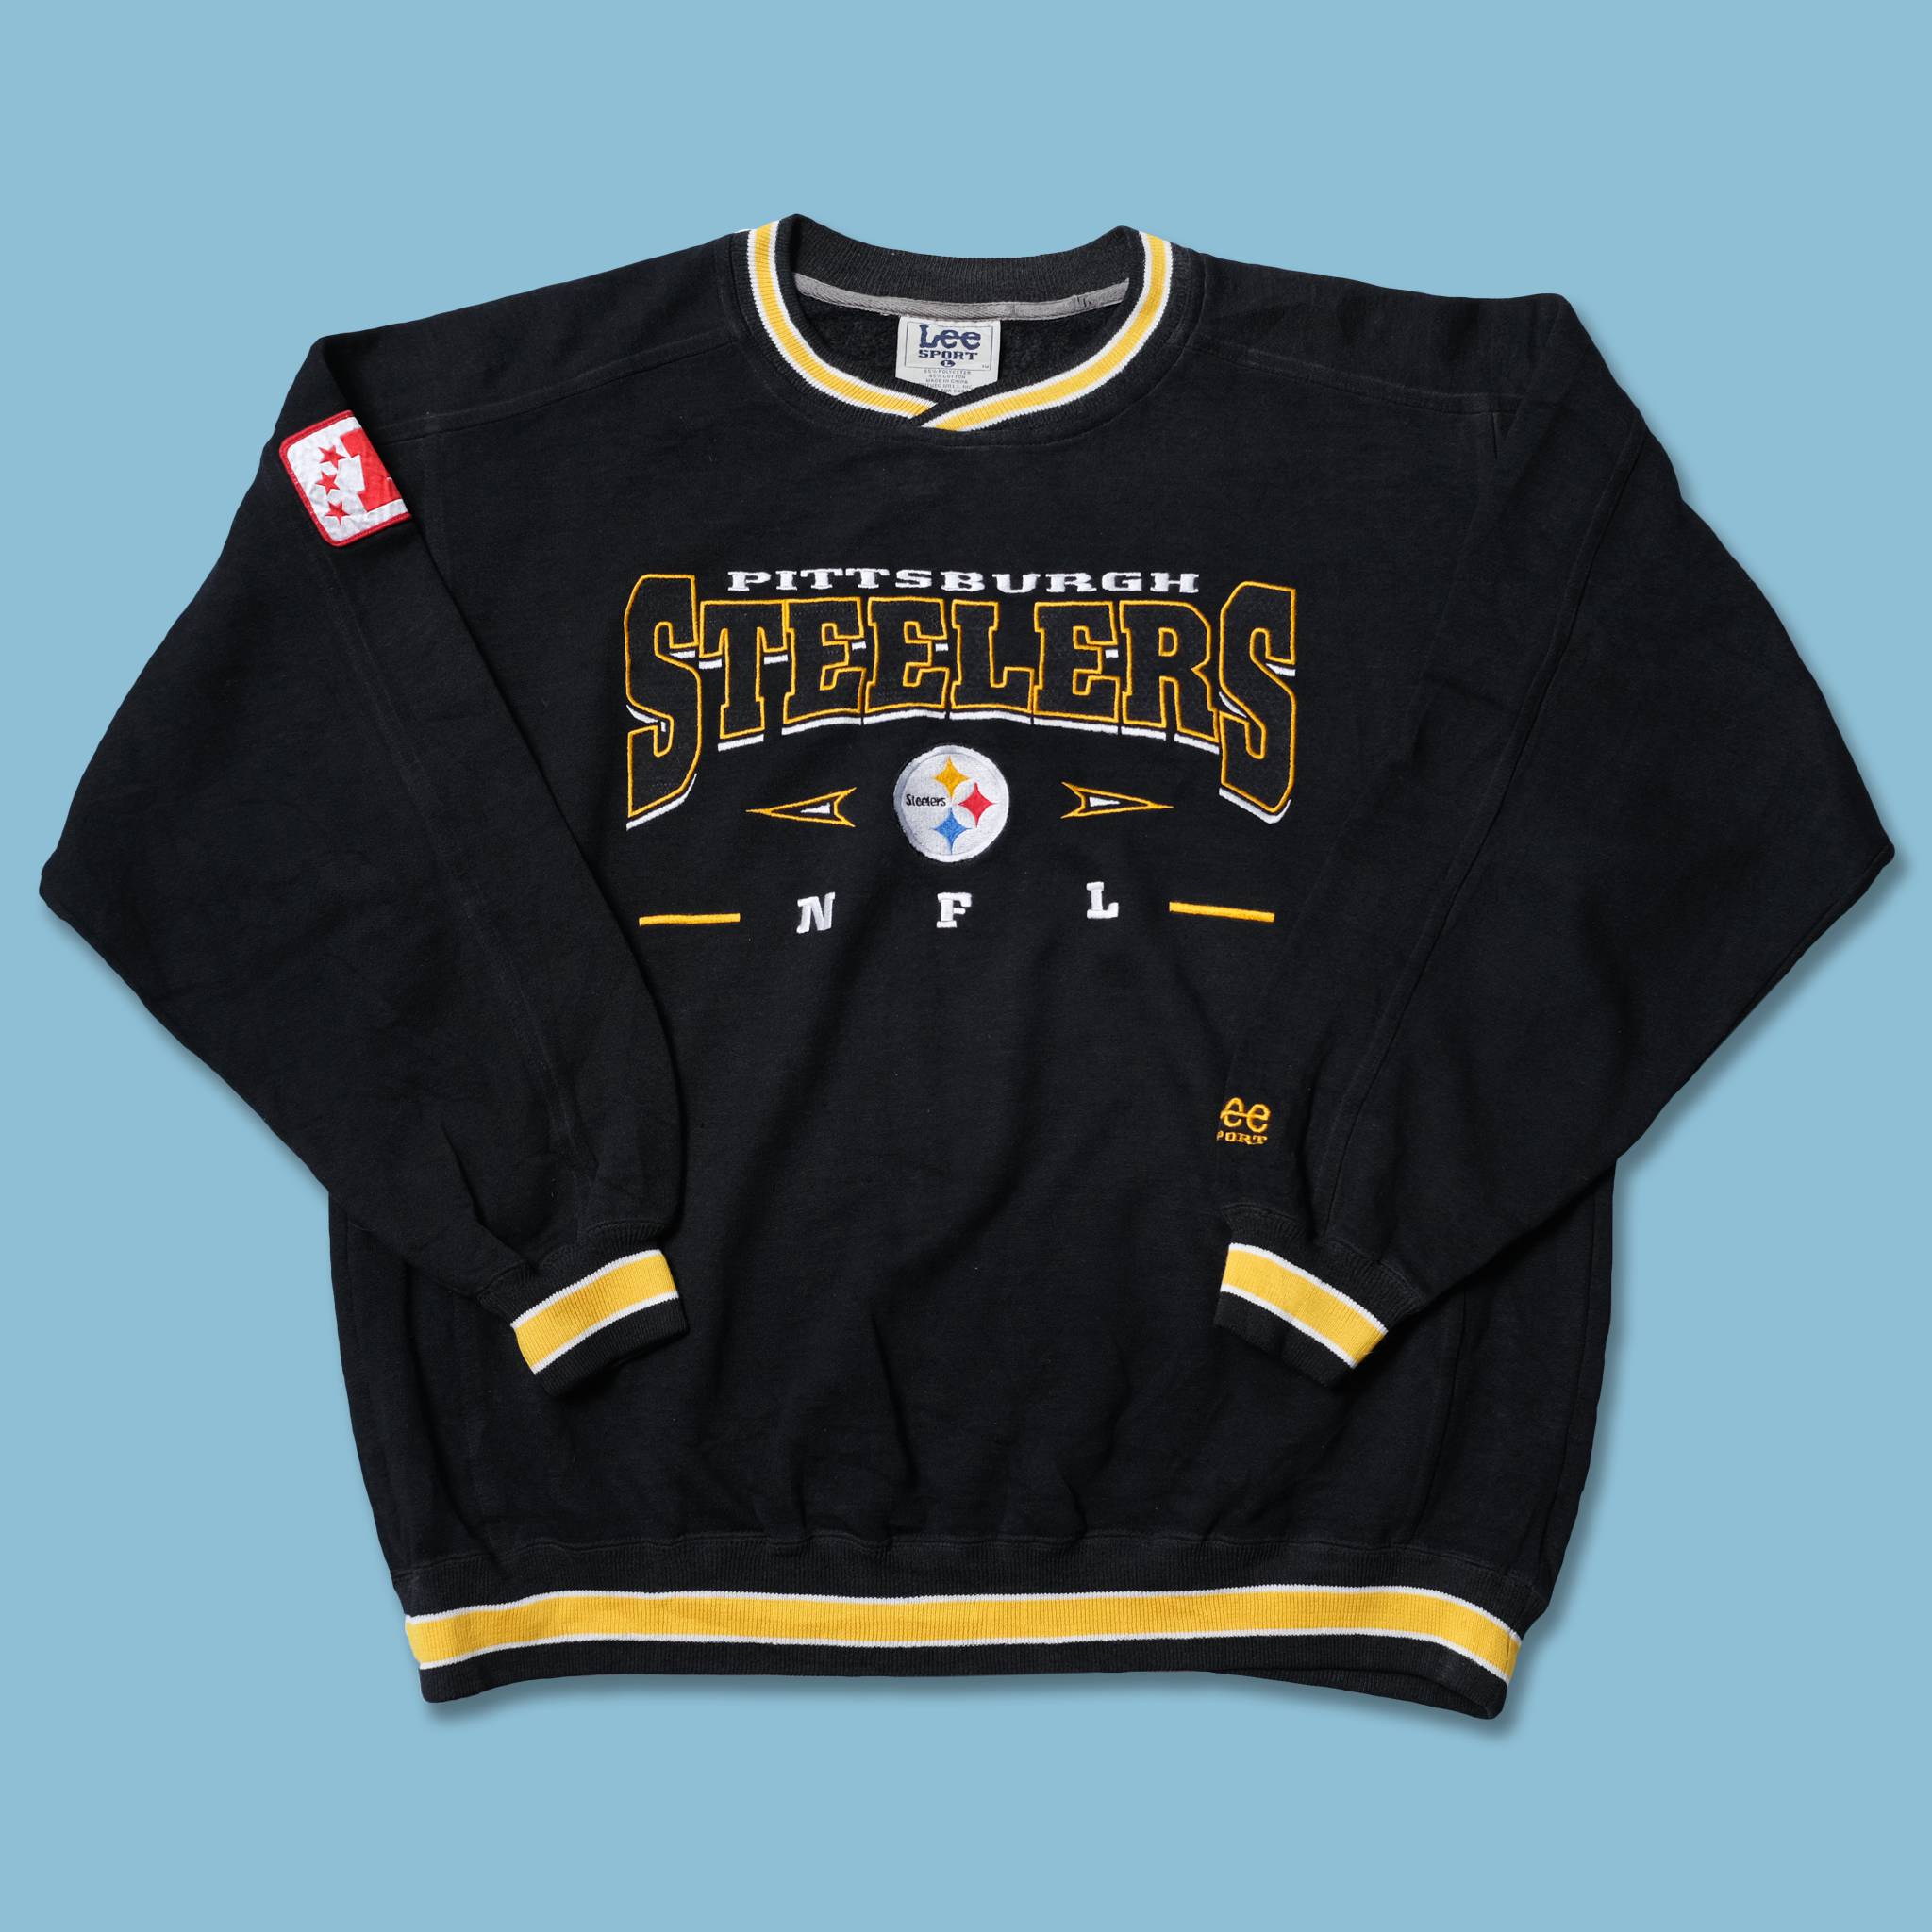 Steelers Sweater on Sale, SAVE 57% 